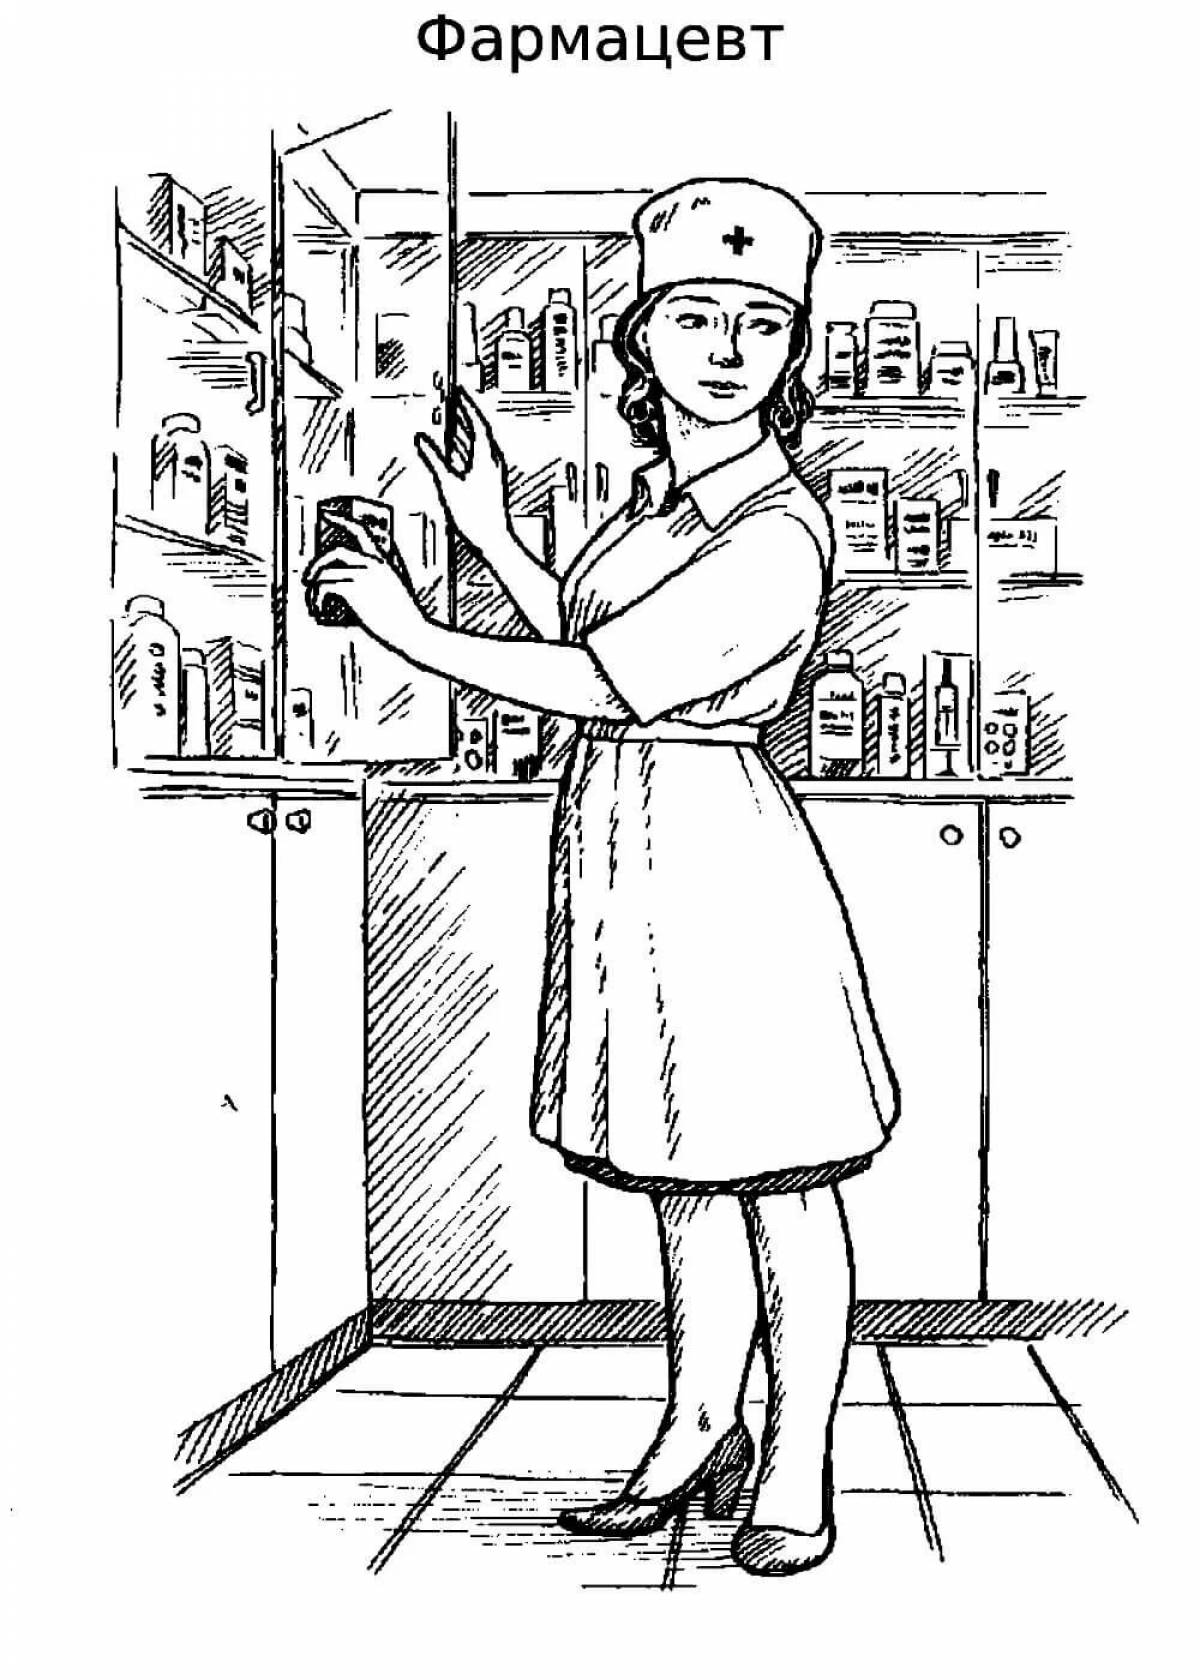 Pharmacist #5